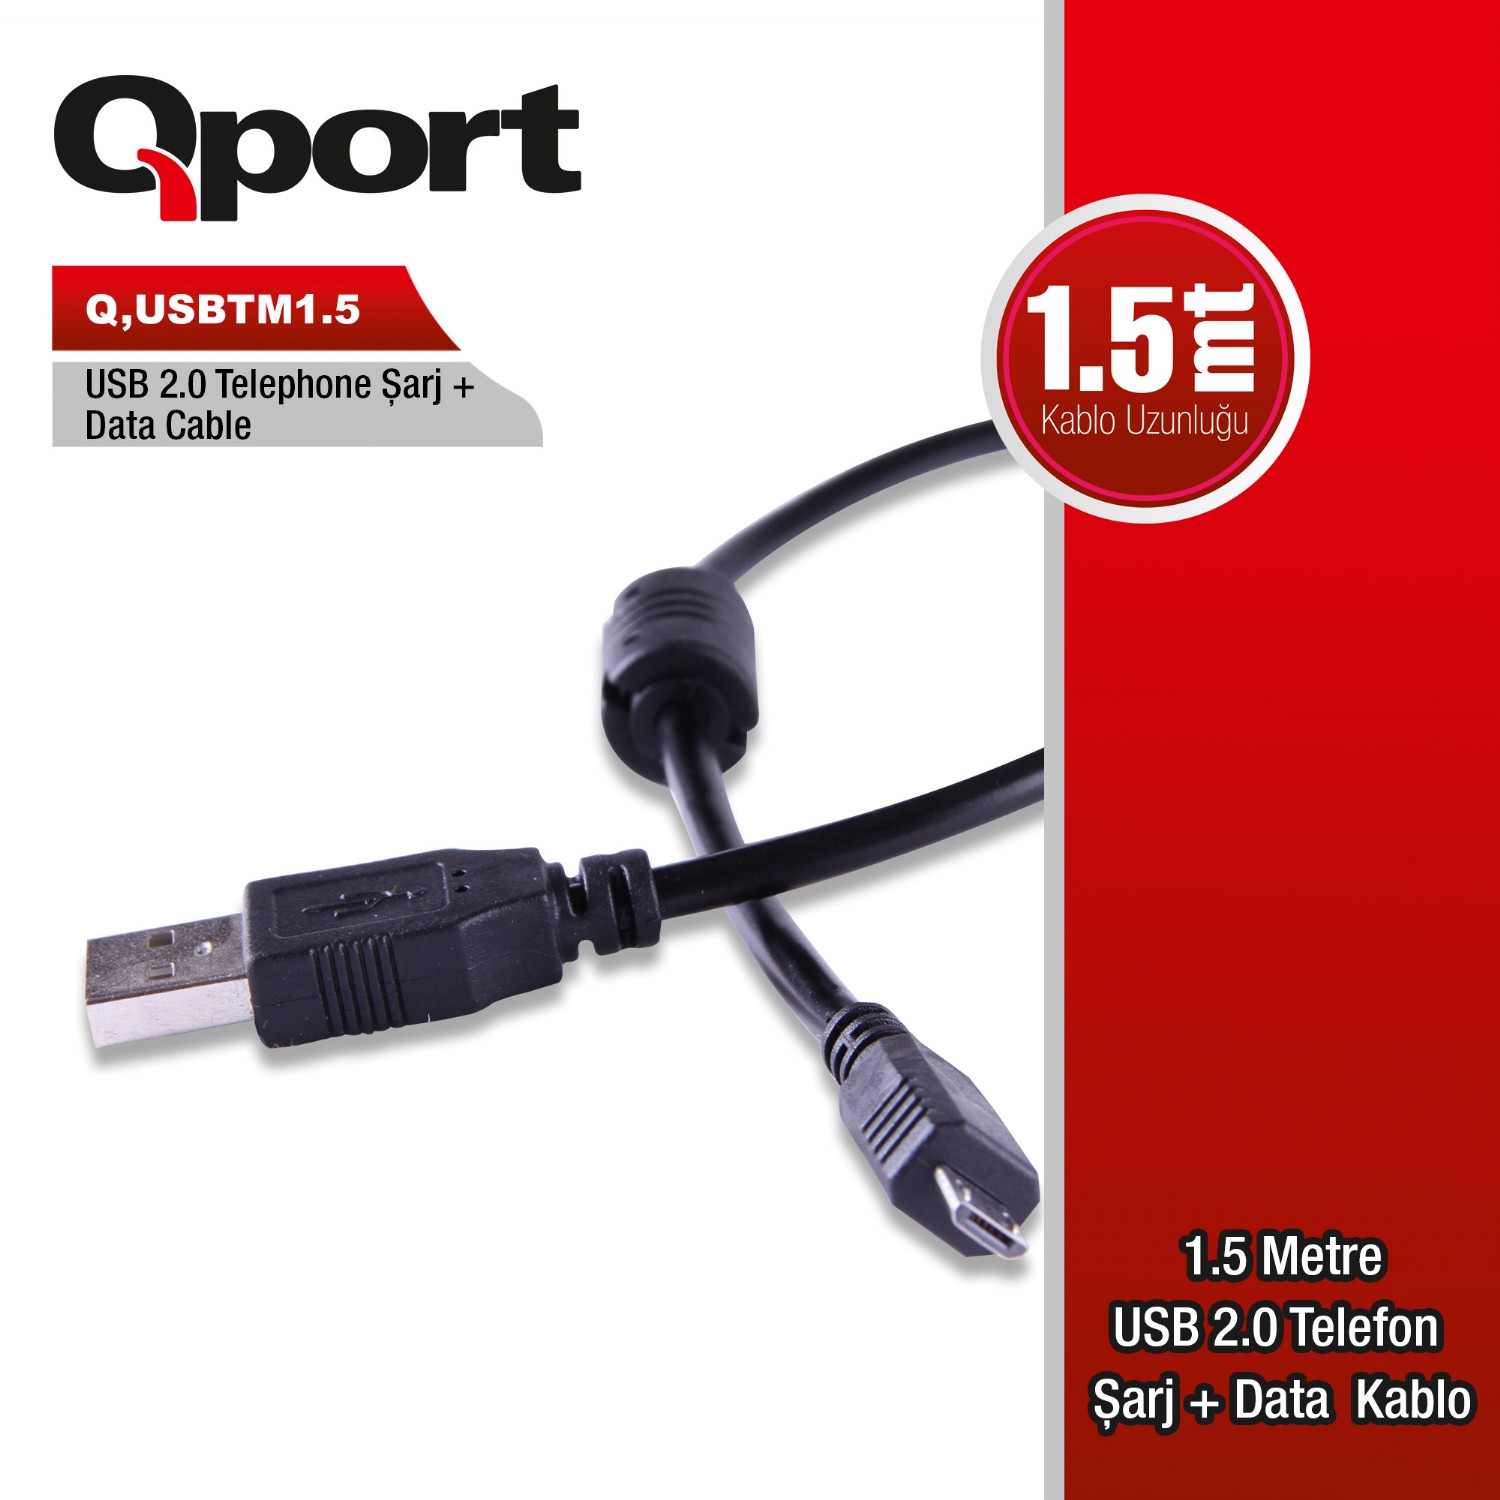 Q-USBTM1.5